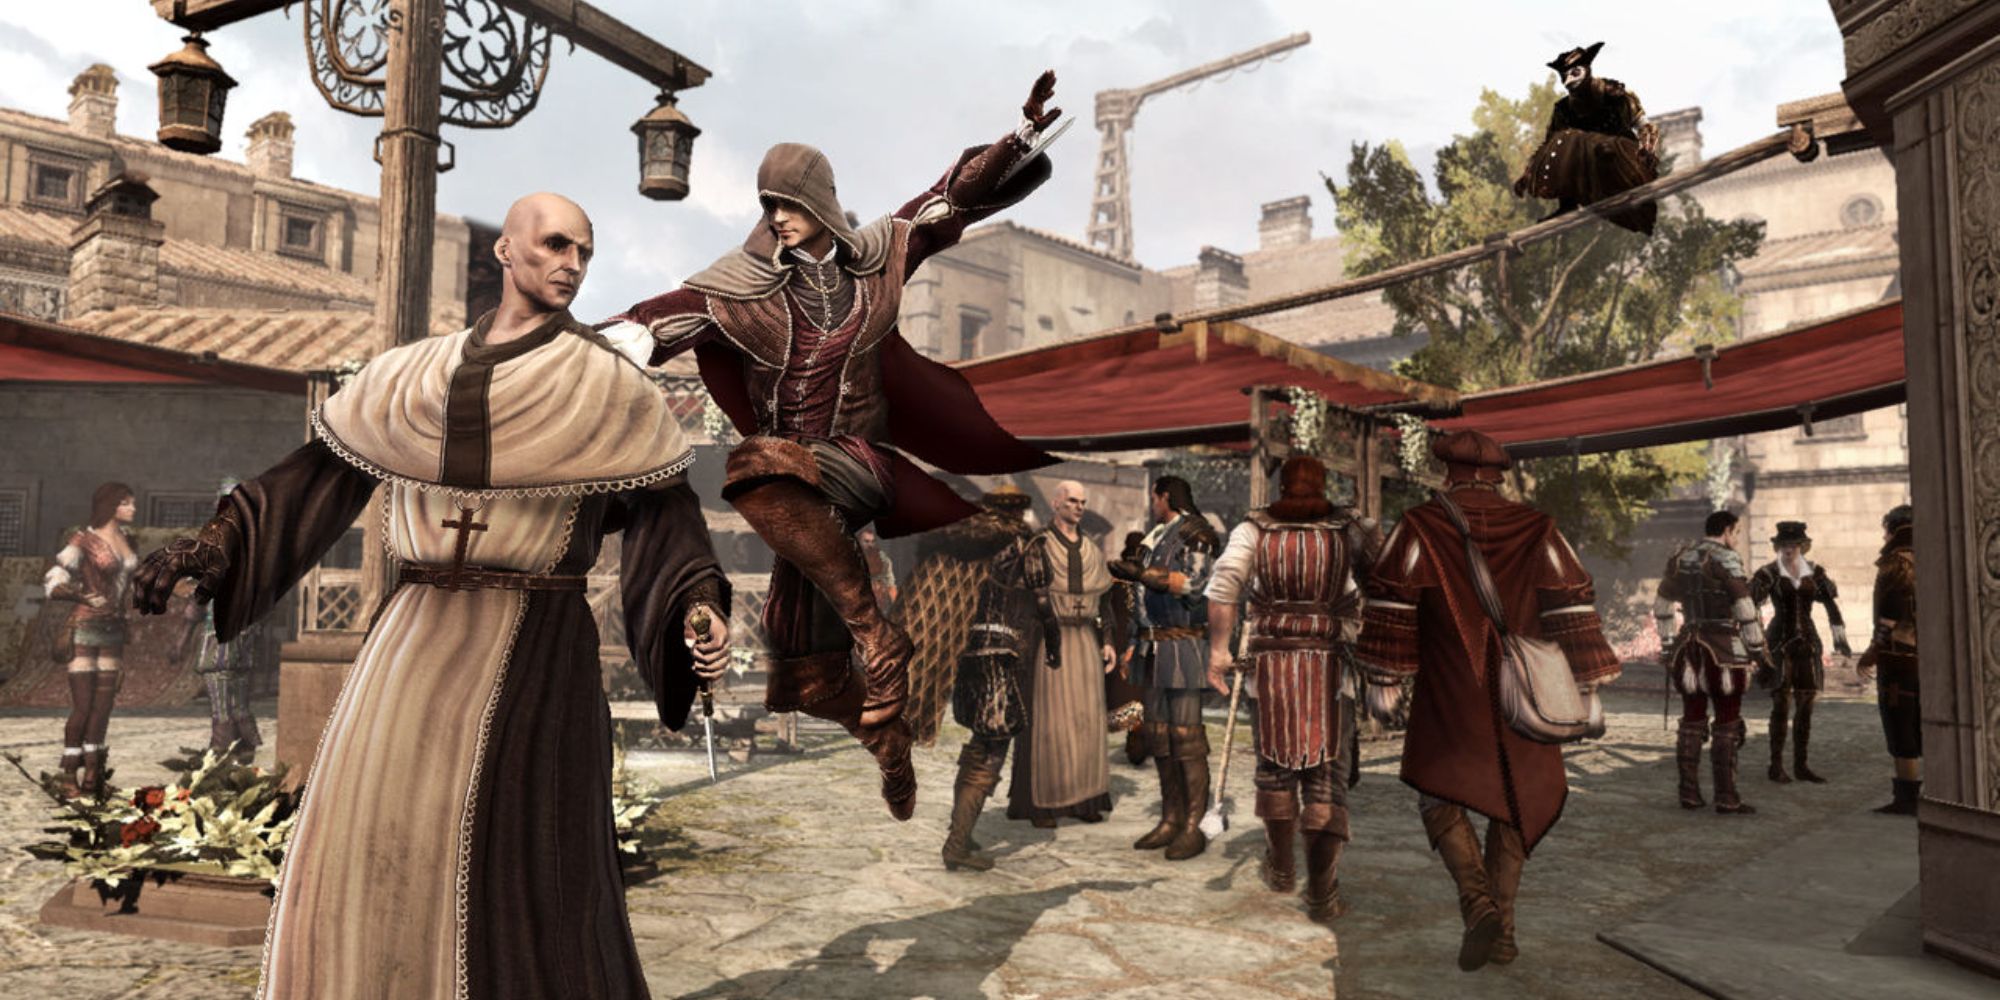 Brotherhood ii. Assassin's Creed: братство крови. Ассасин Крид братство крови. Игра ассасин Крид братство крови. Assassin's Creed 2 Brotherhood.